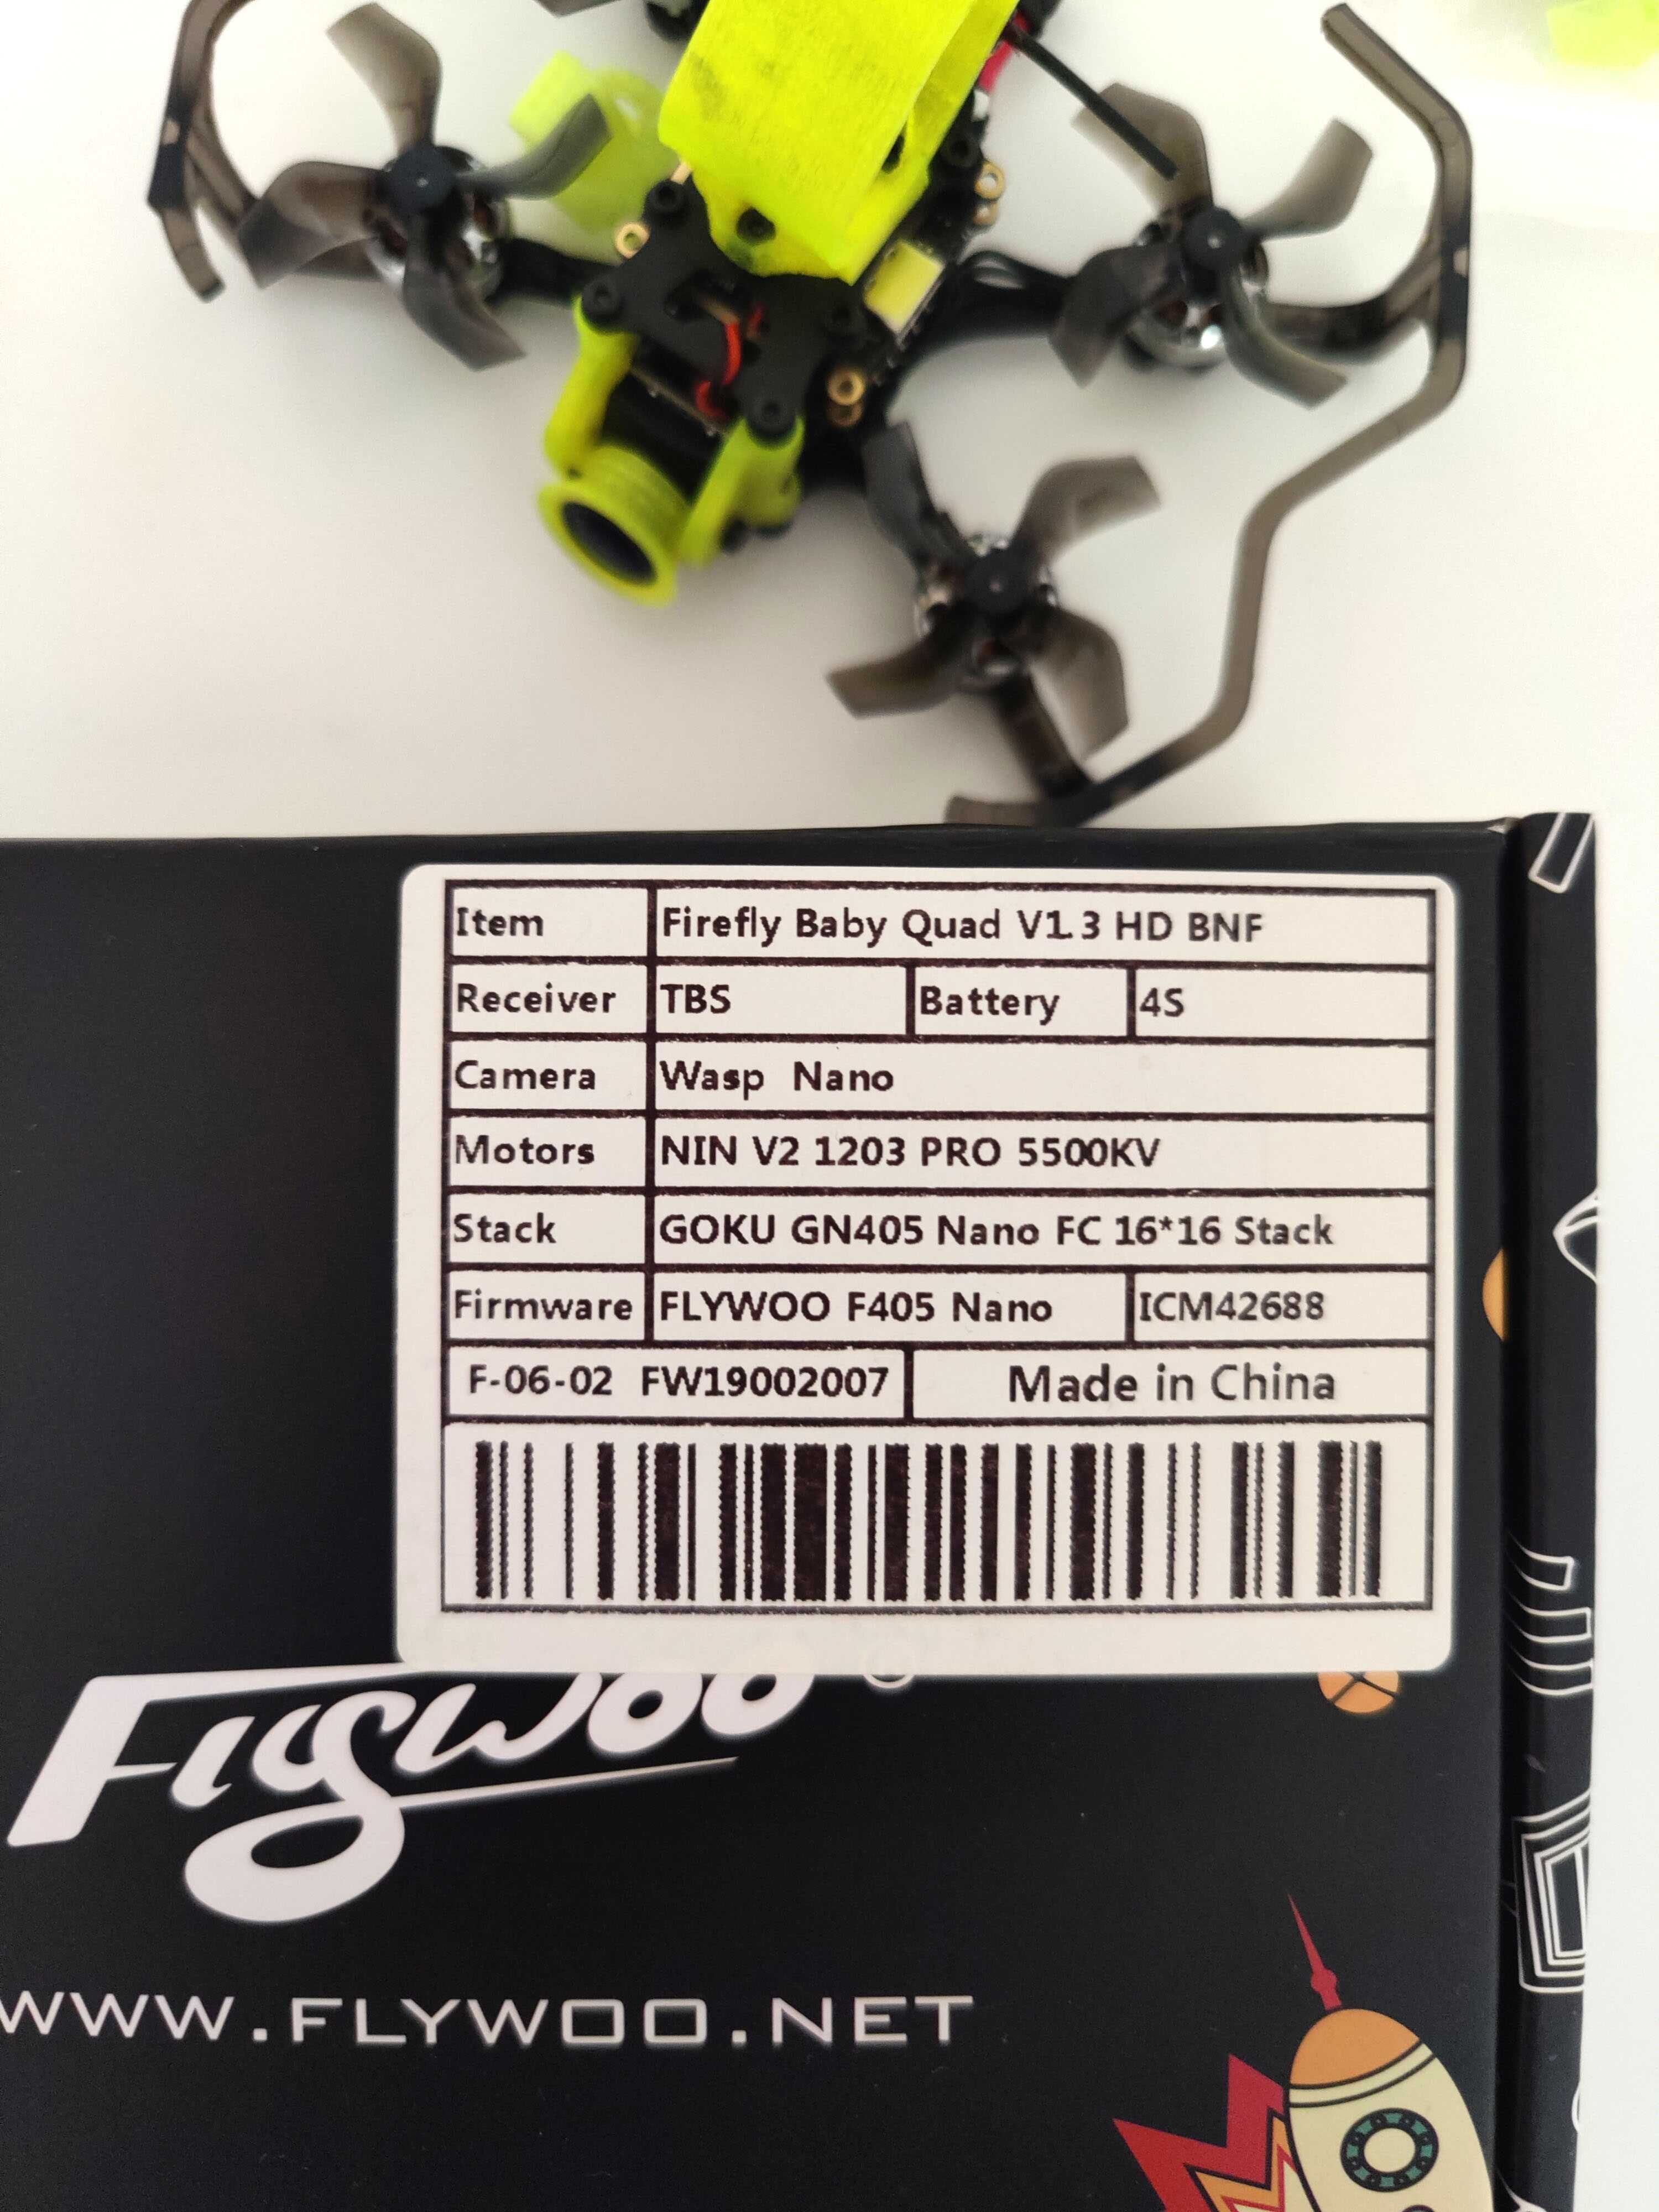 Flywoo Firefly Baby Quad V1.3 HD - TBS Crossfire - Dron FPV